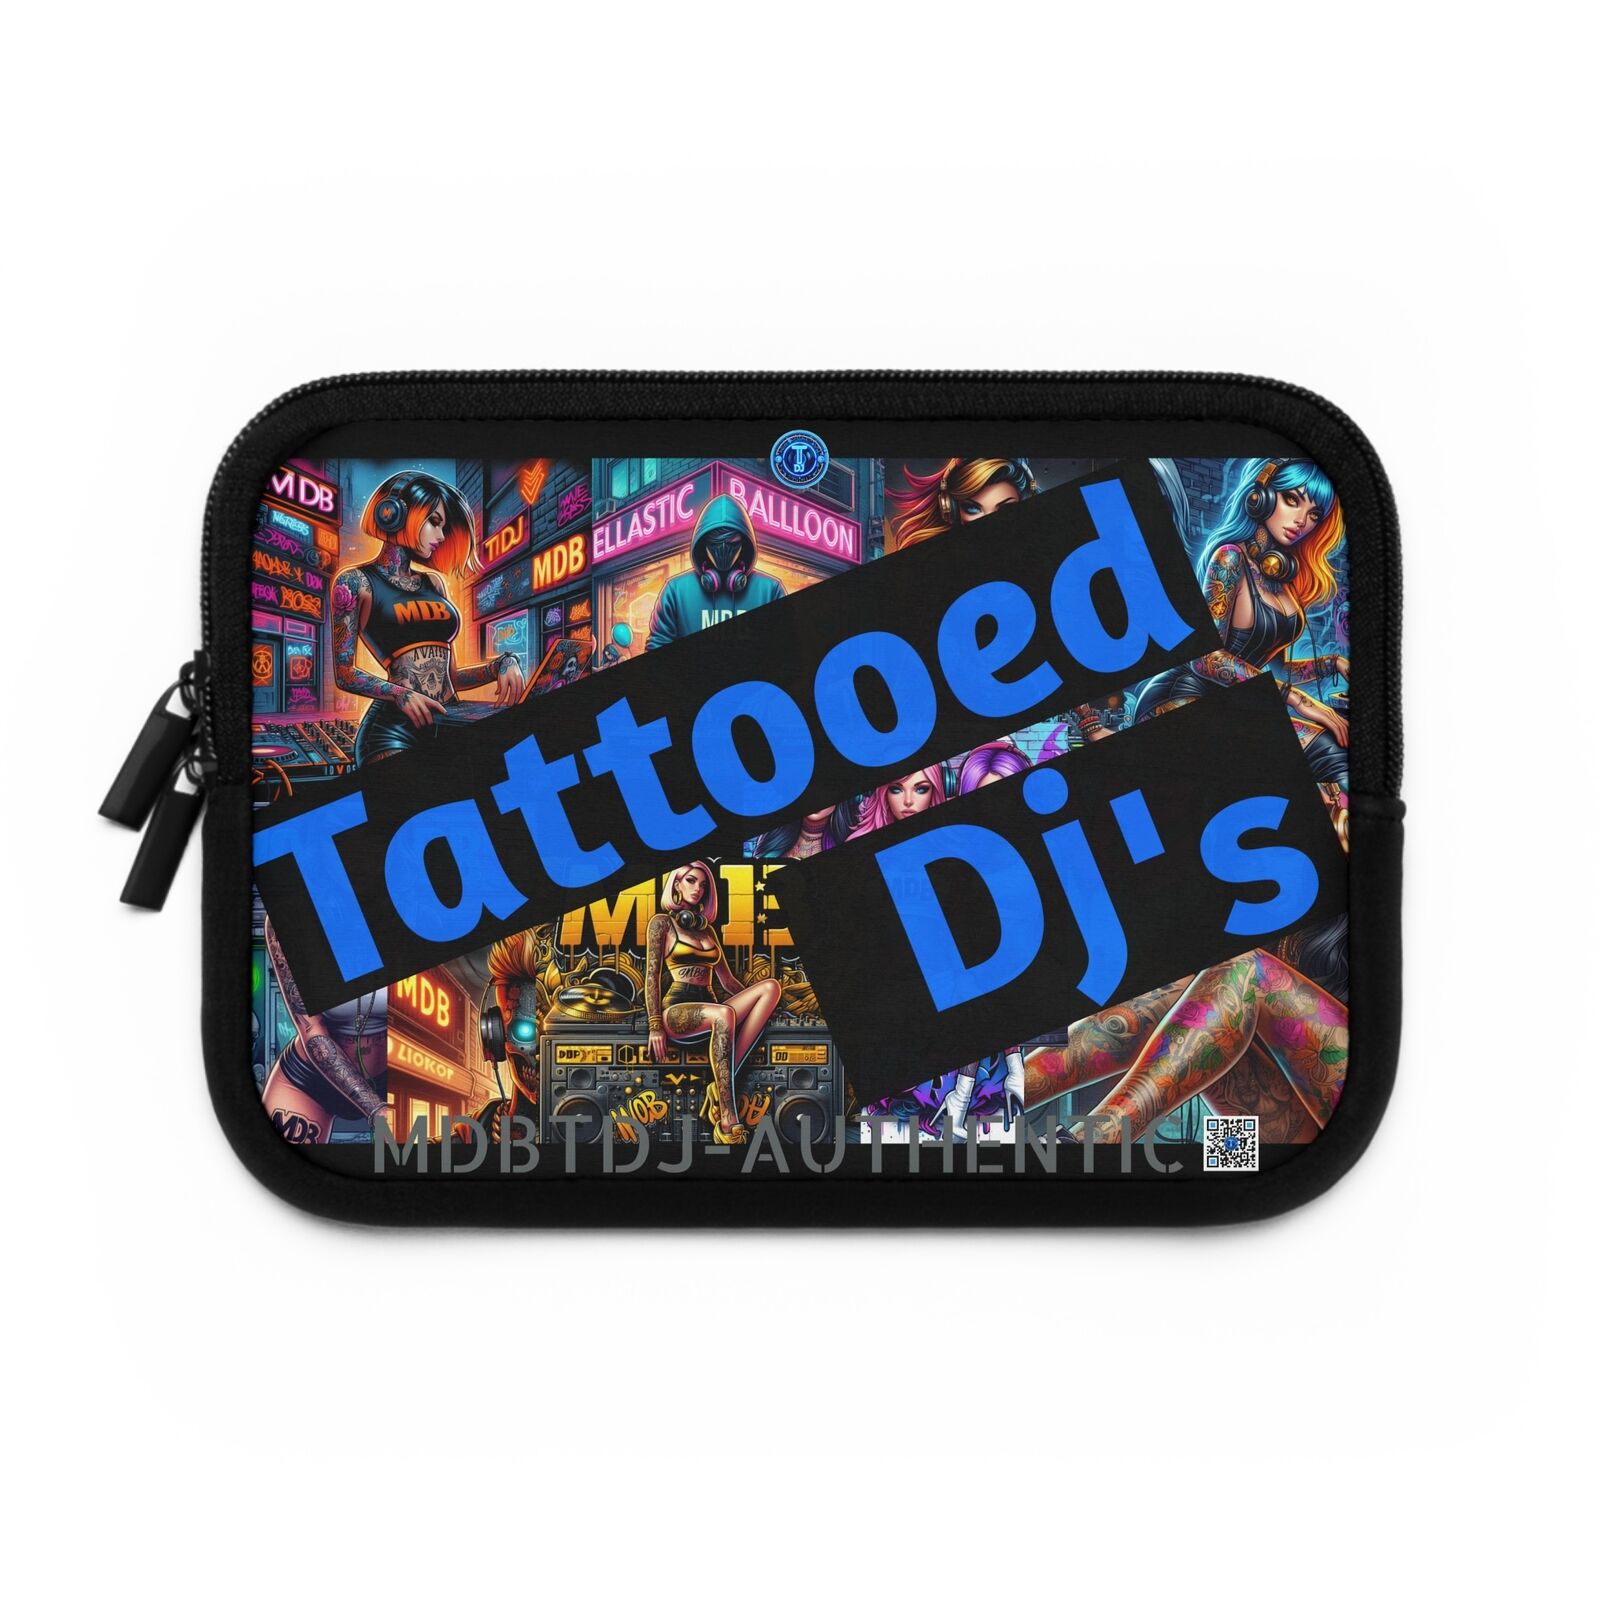 MDBTDJ Tattooed Dj\'s Limited Edition Laptop / Tablet Bag for 7 to 17 inch 